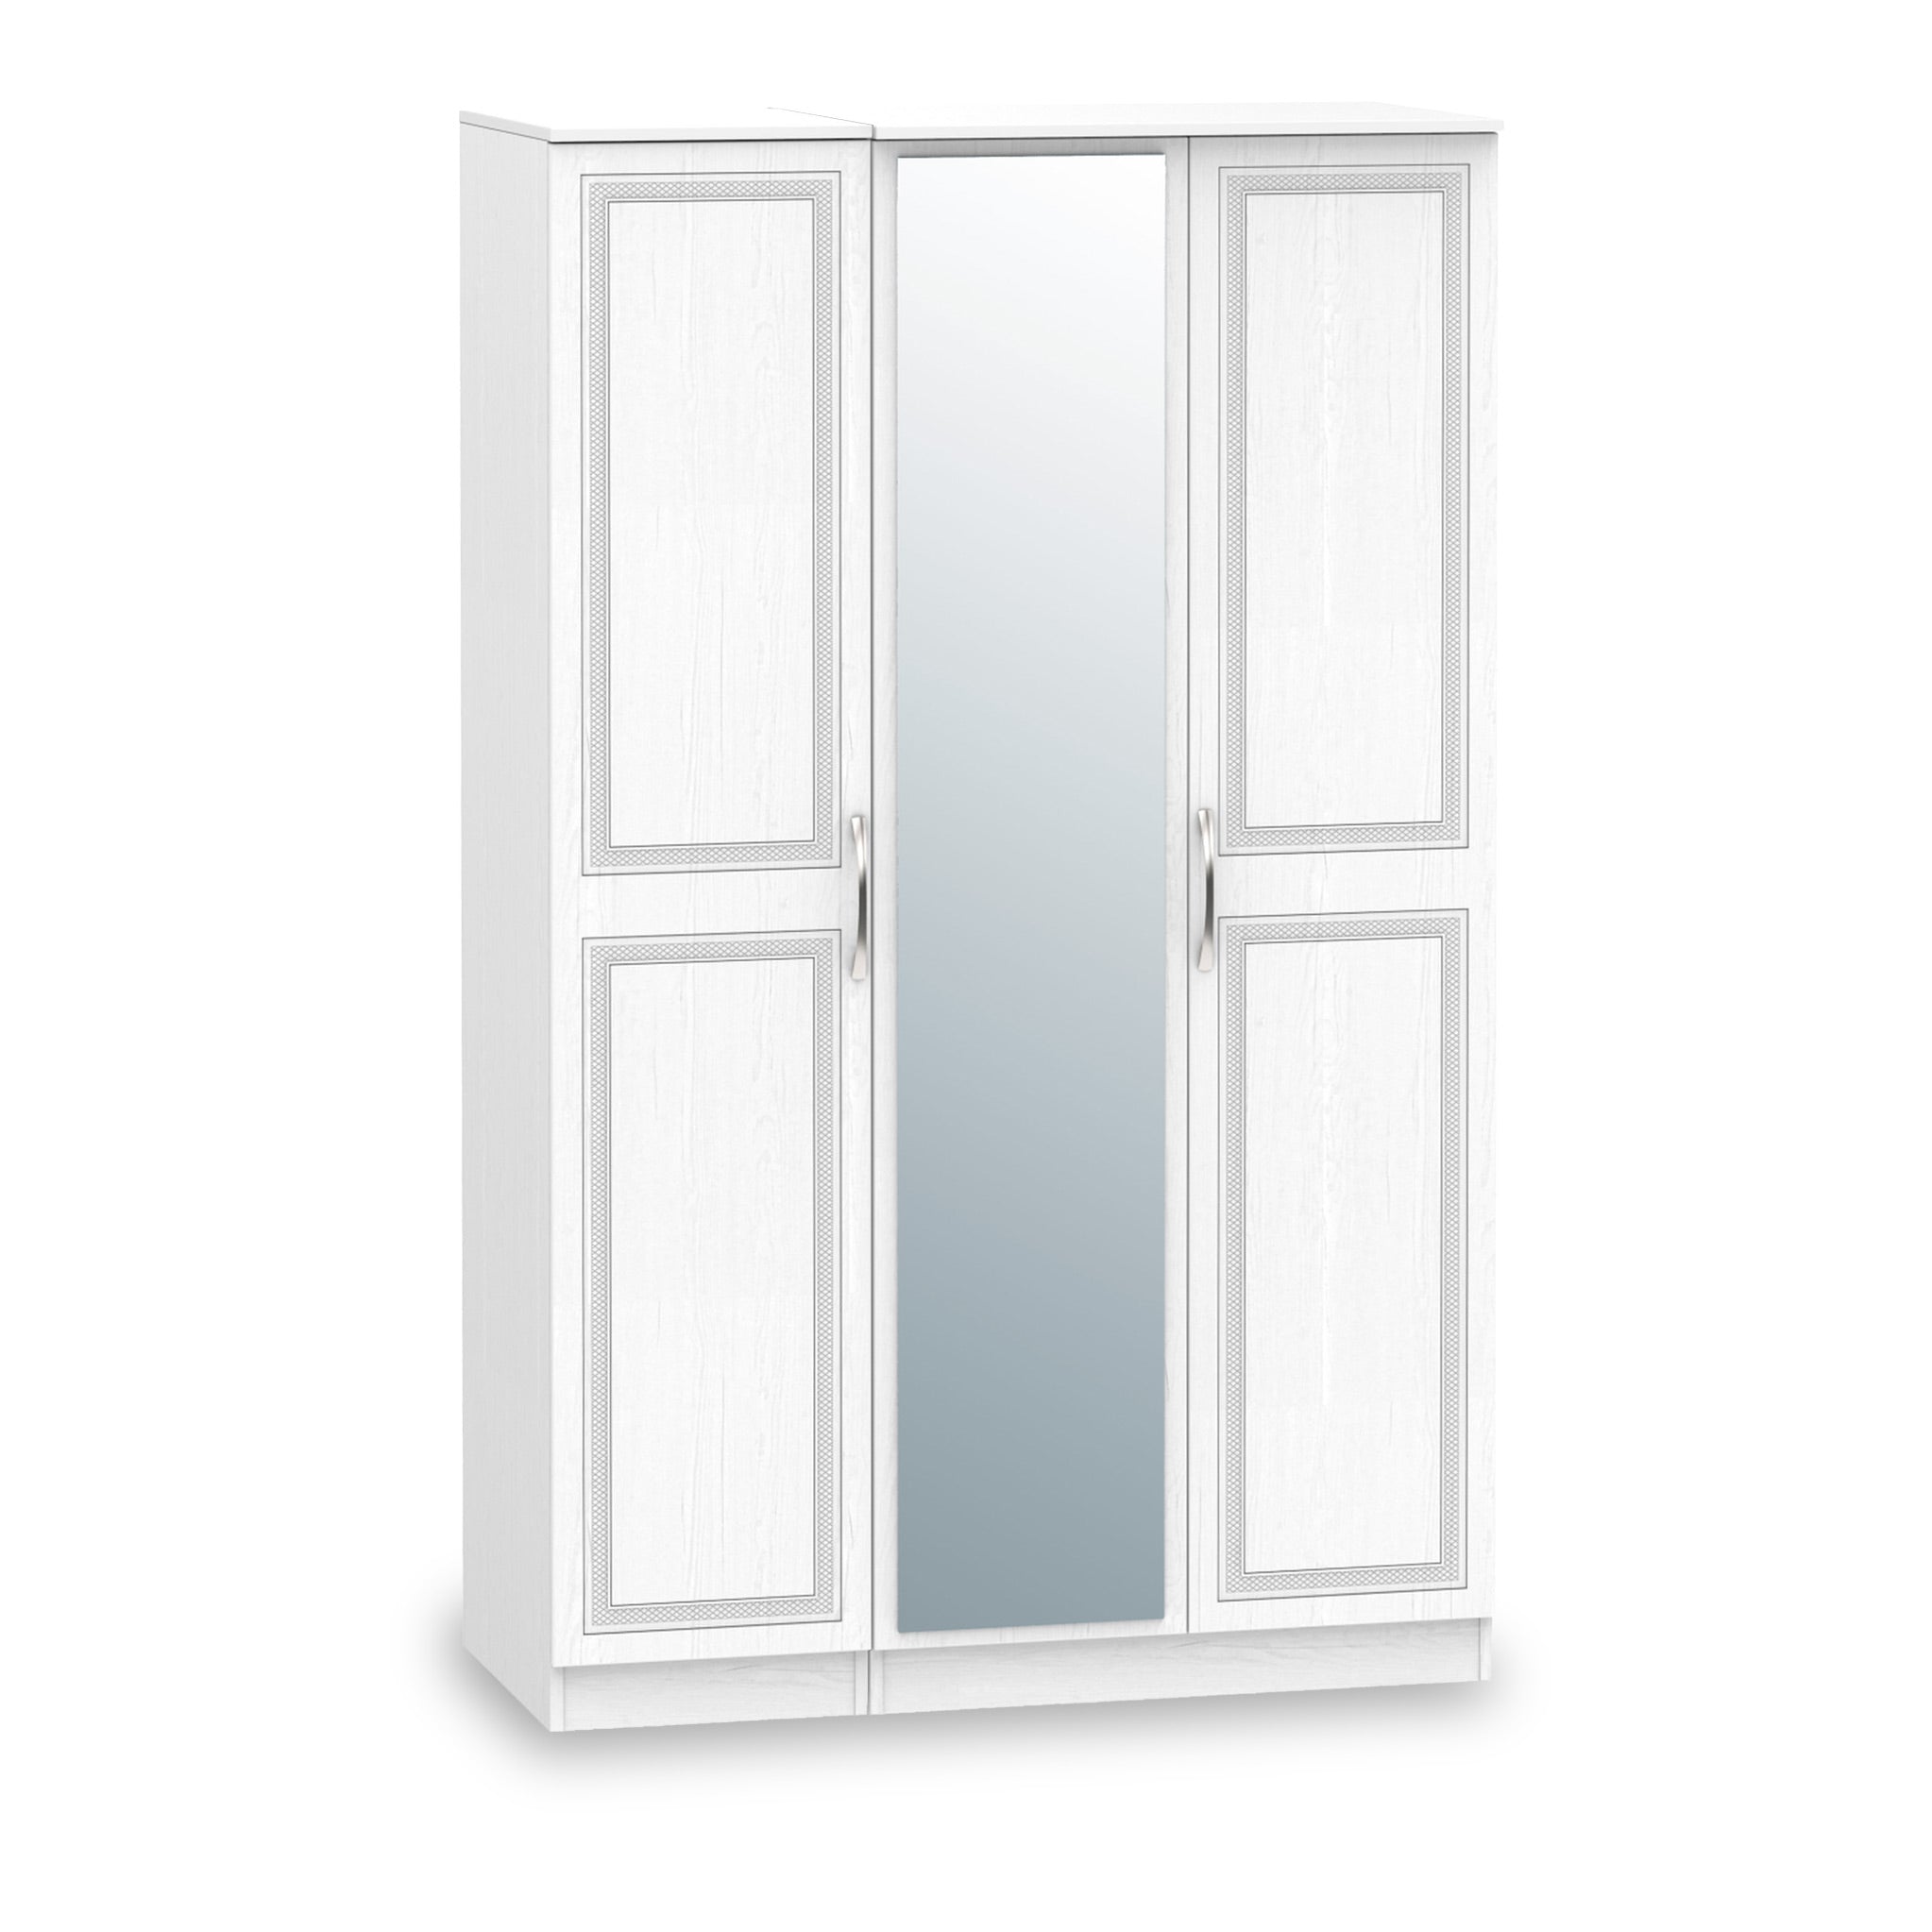 Killgarth 3 Door Triple Wardrobe With Mirror White Or Oak Effect